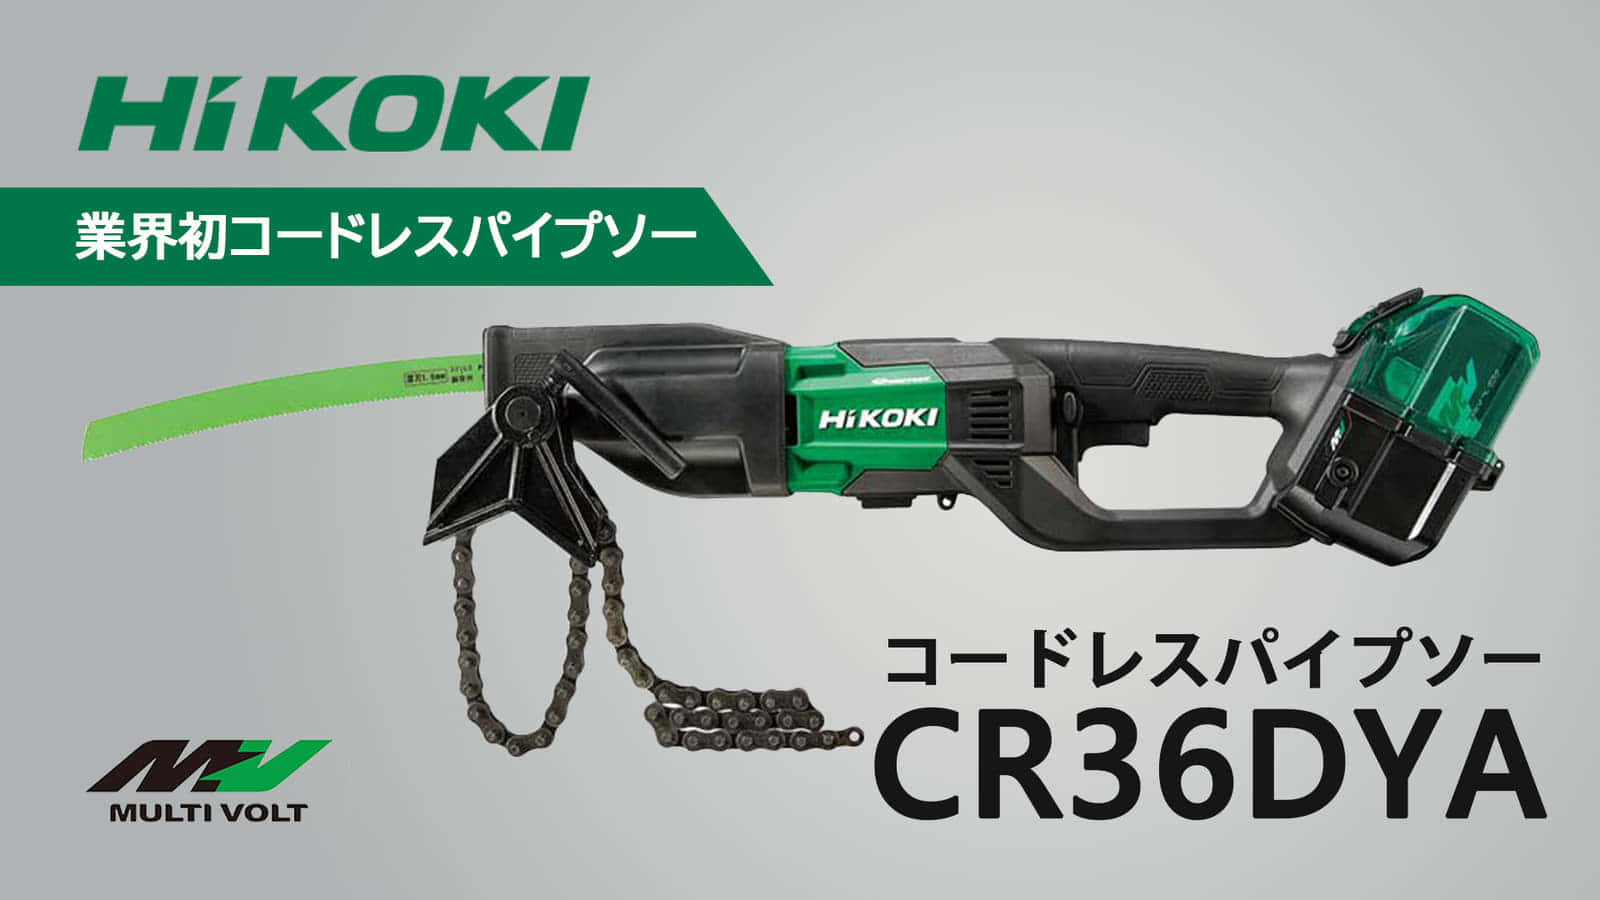 HiKOKI CR36DYA コードレスパイプソーを発売、鋳鉄菅も切れる充電式モデル